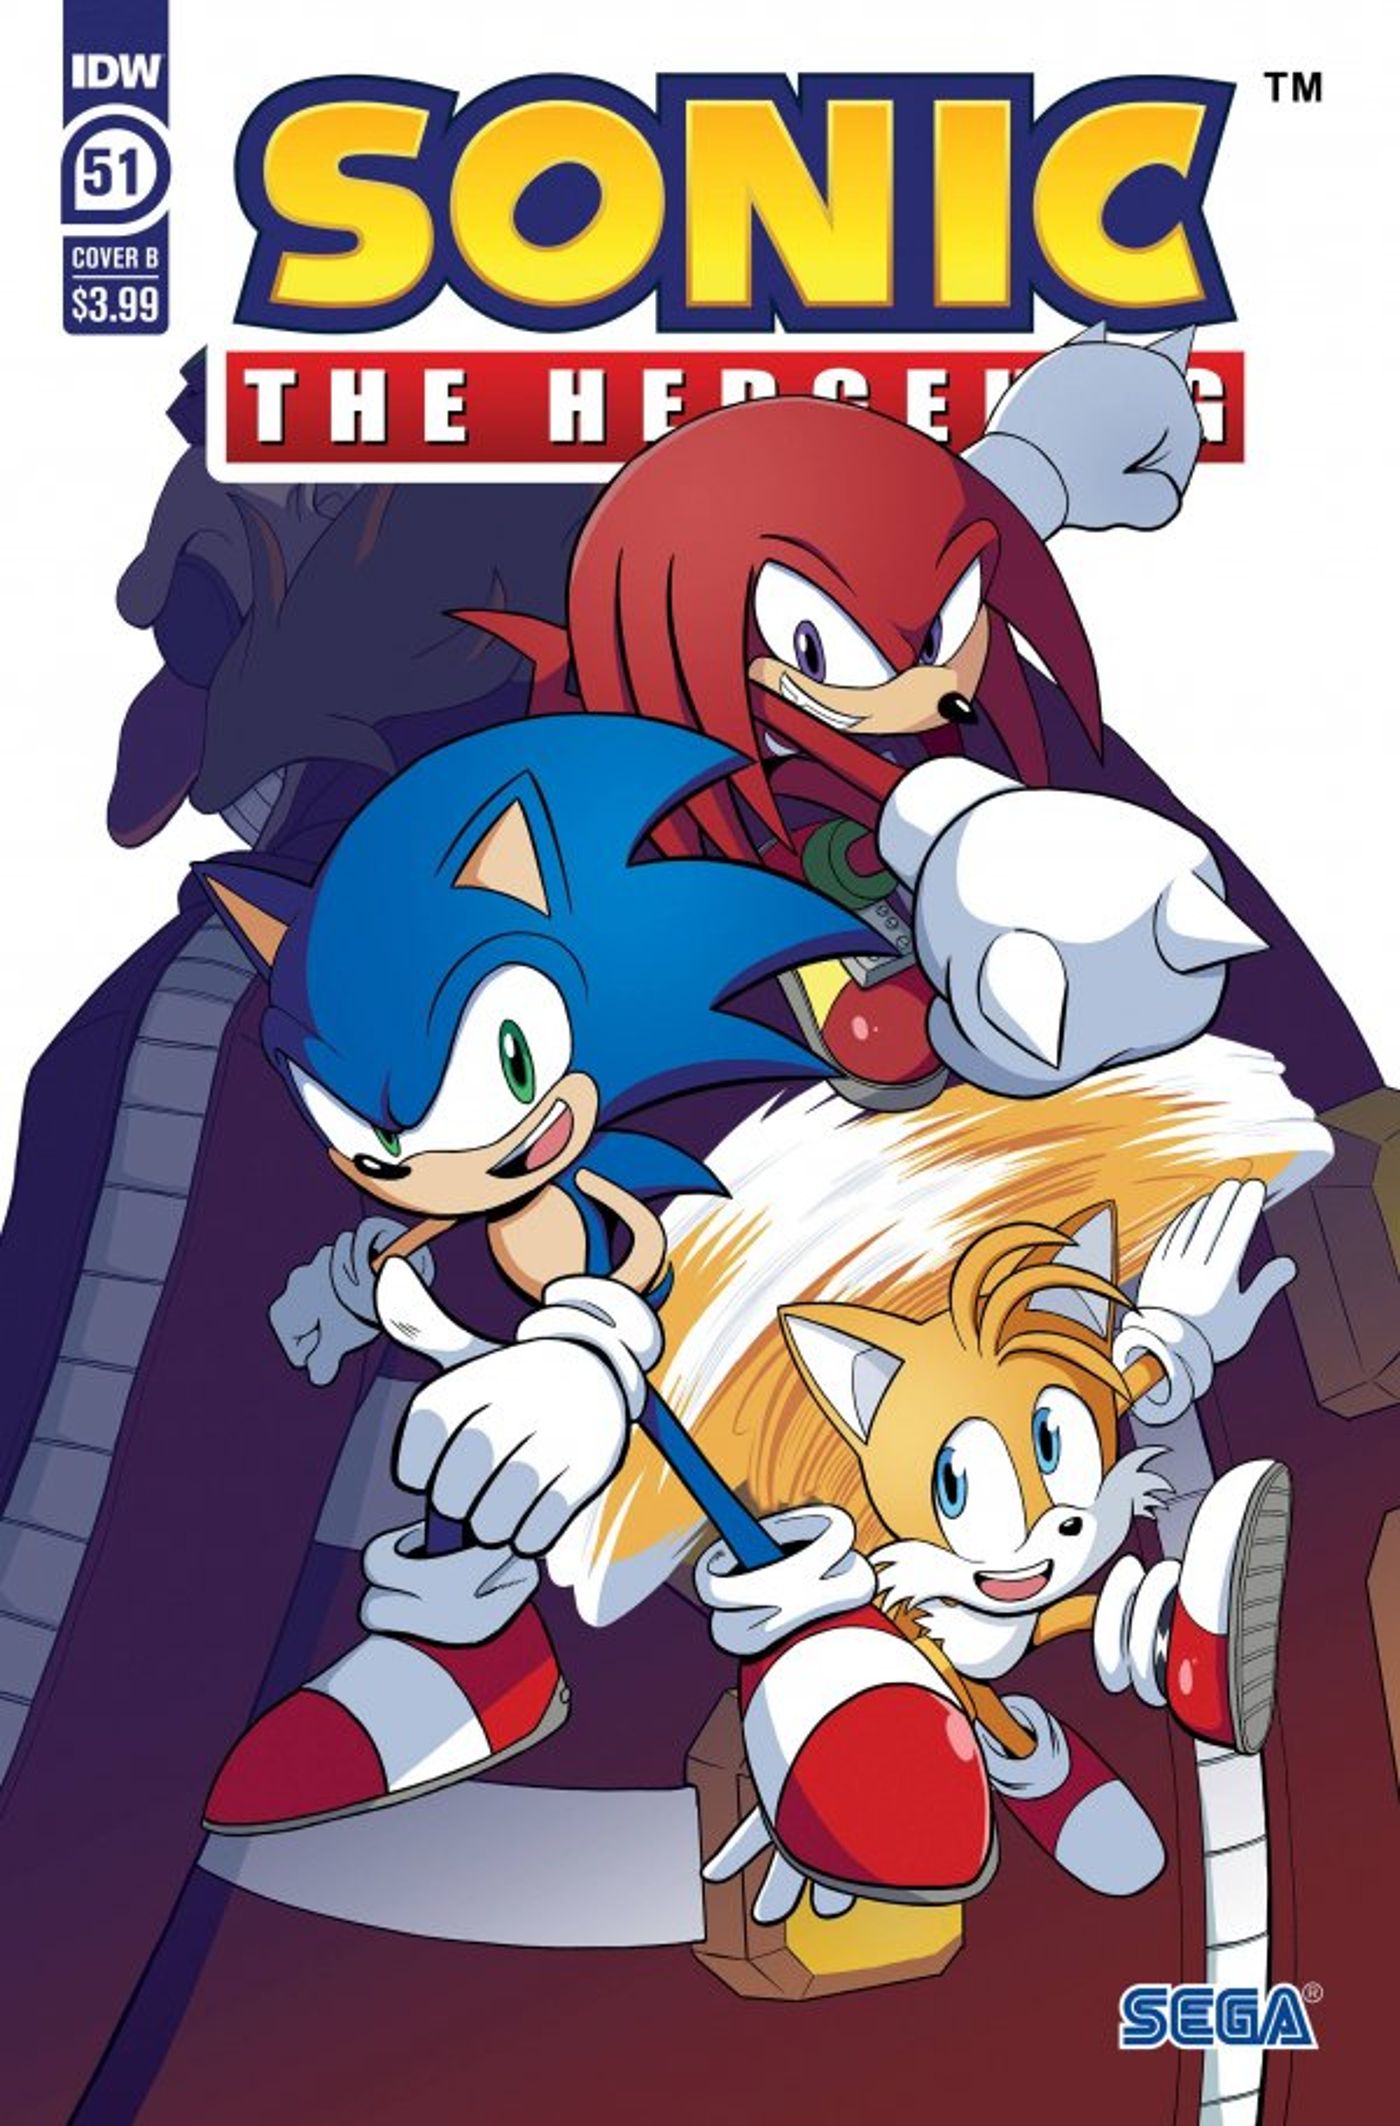 New Sonic Variant Cover Teases The Long-Awaited Return of Knuckles